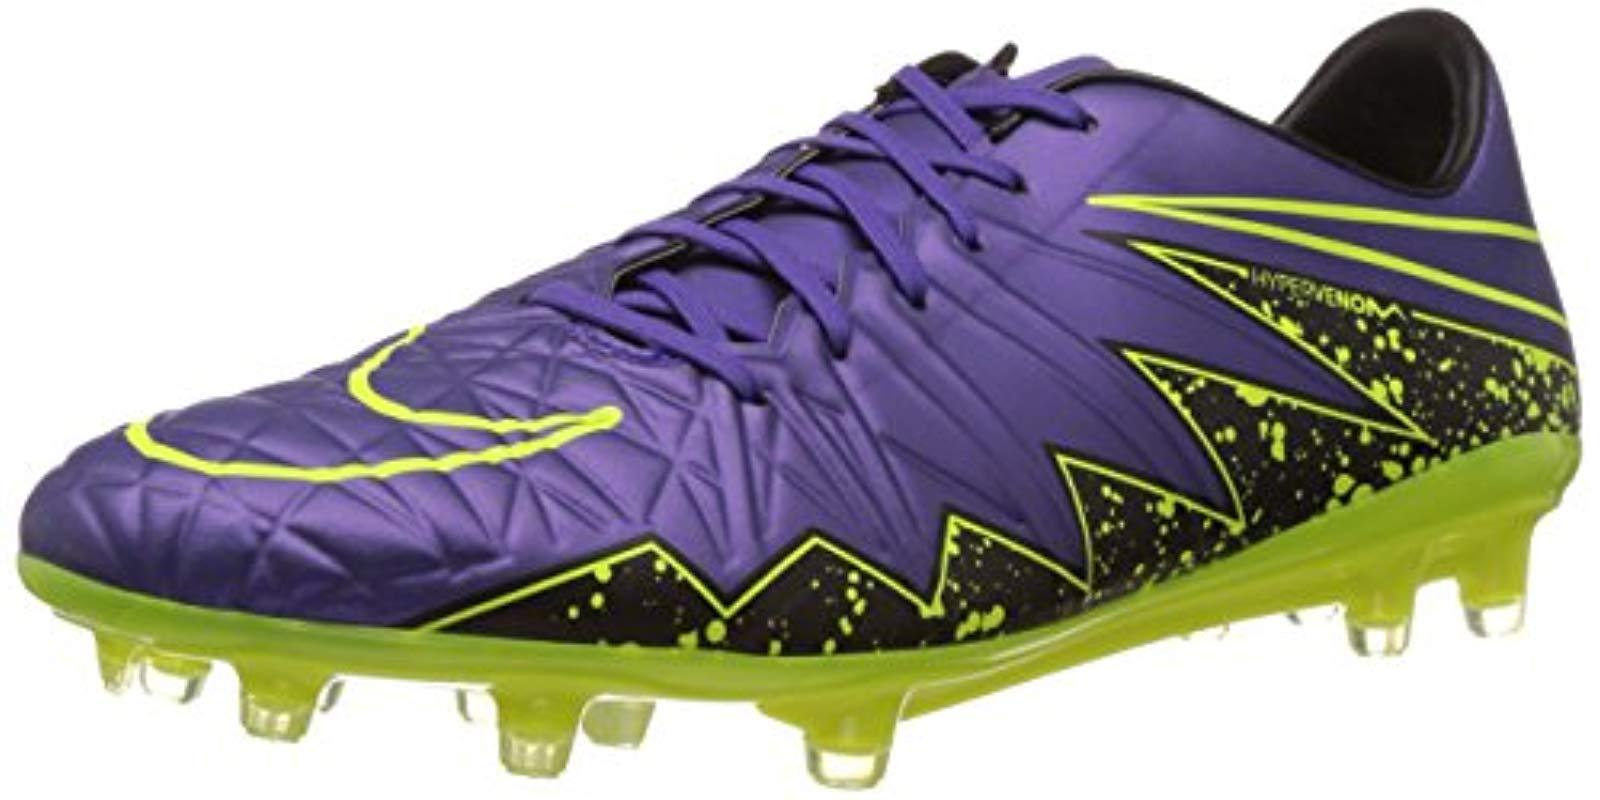 Purple Nike Boots Store - www.bridgepartnersllc.com 1692678957